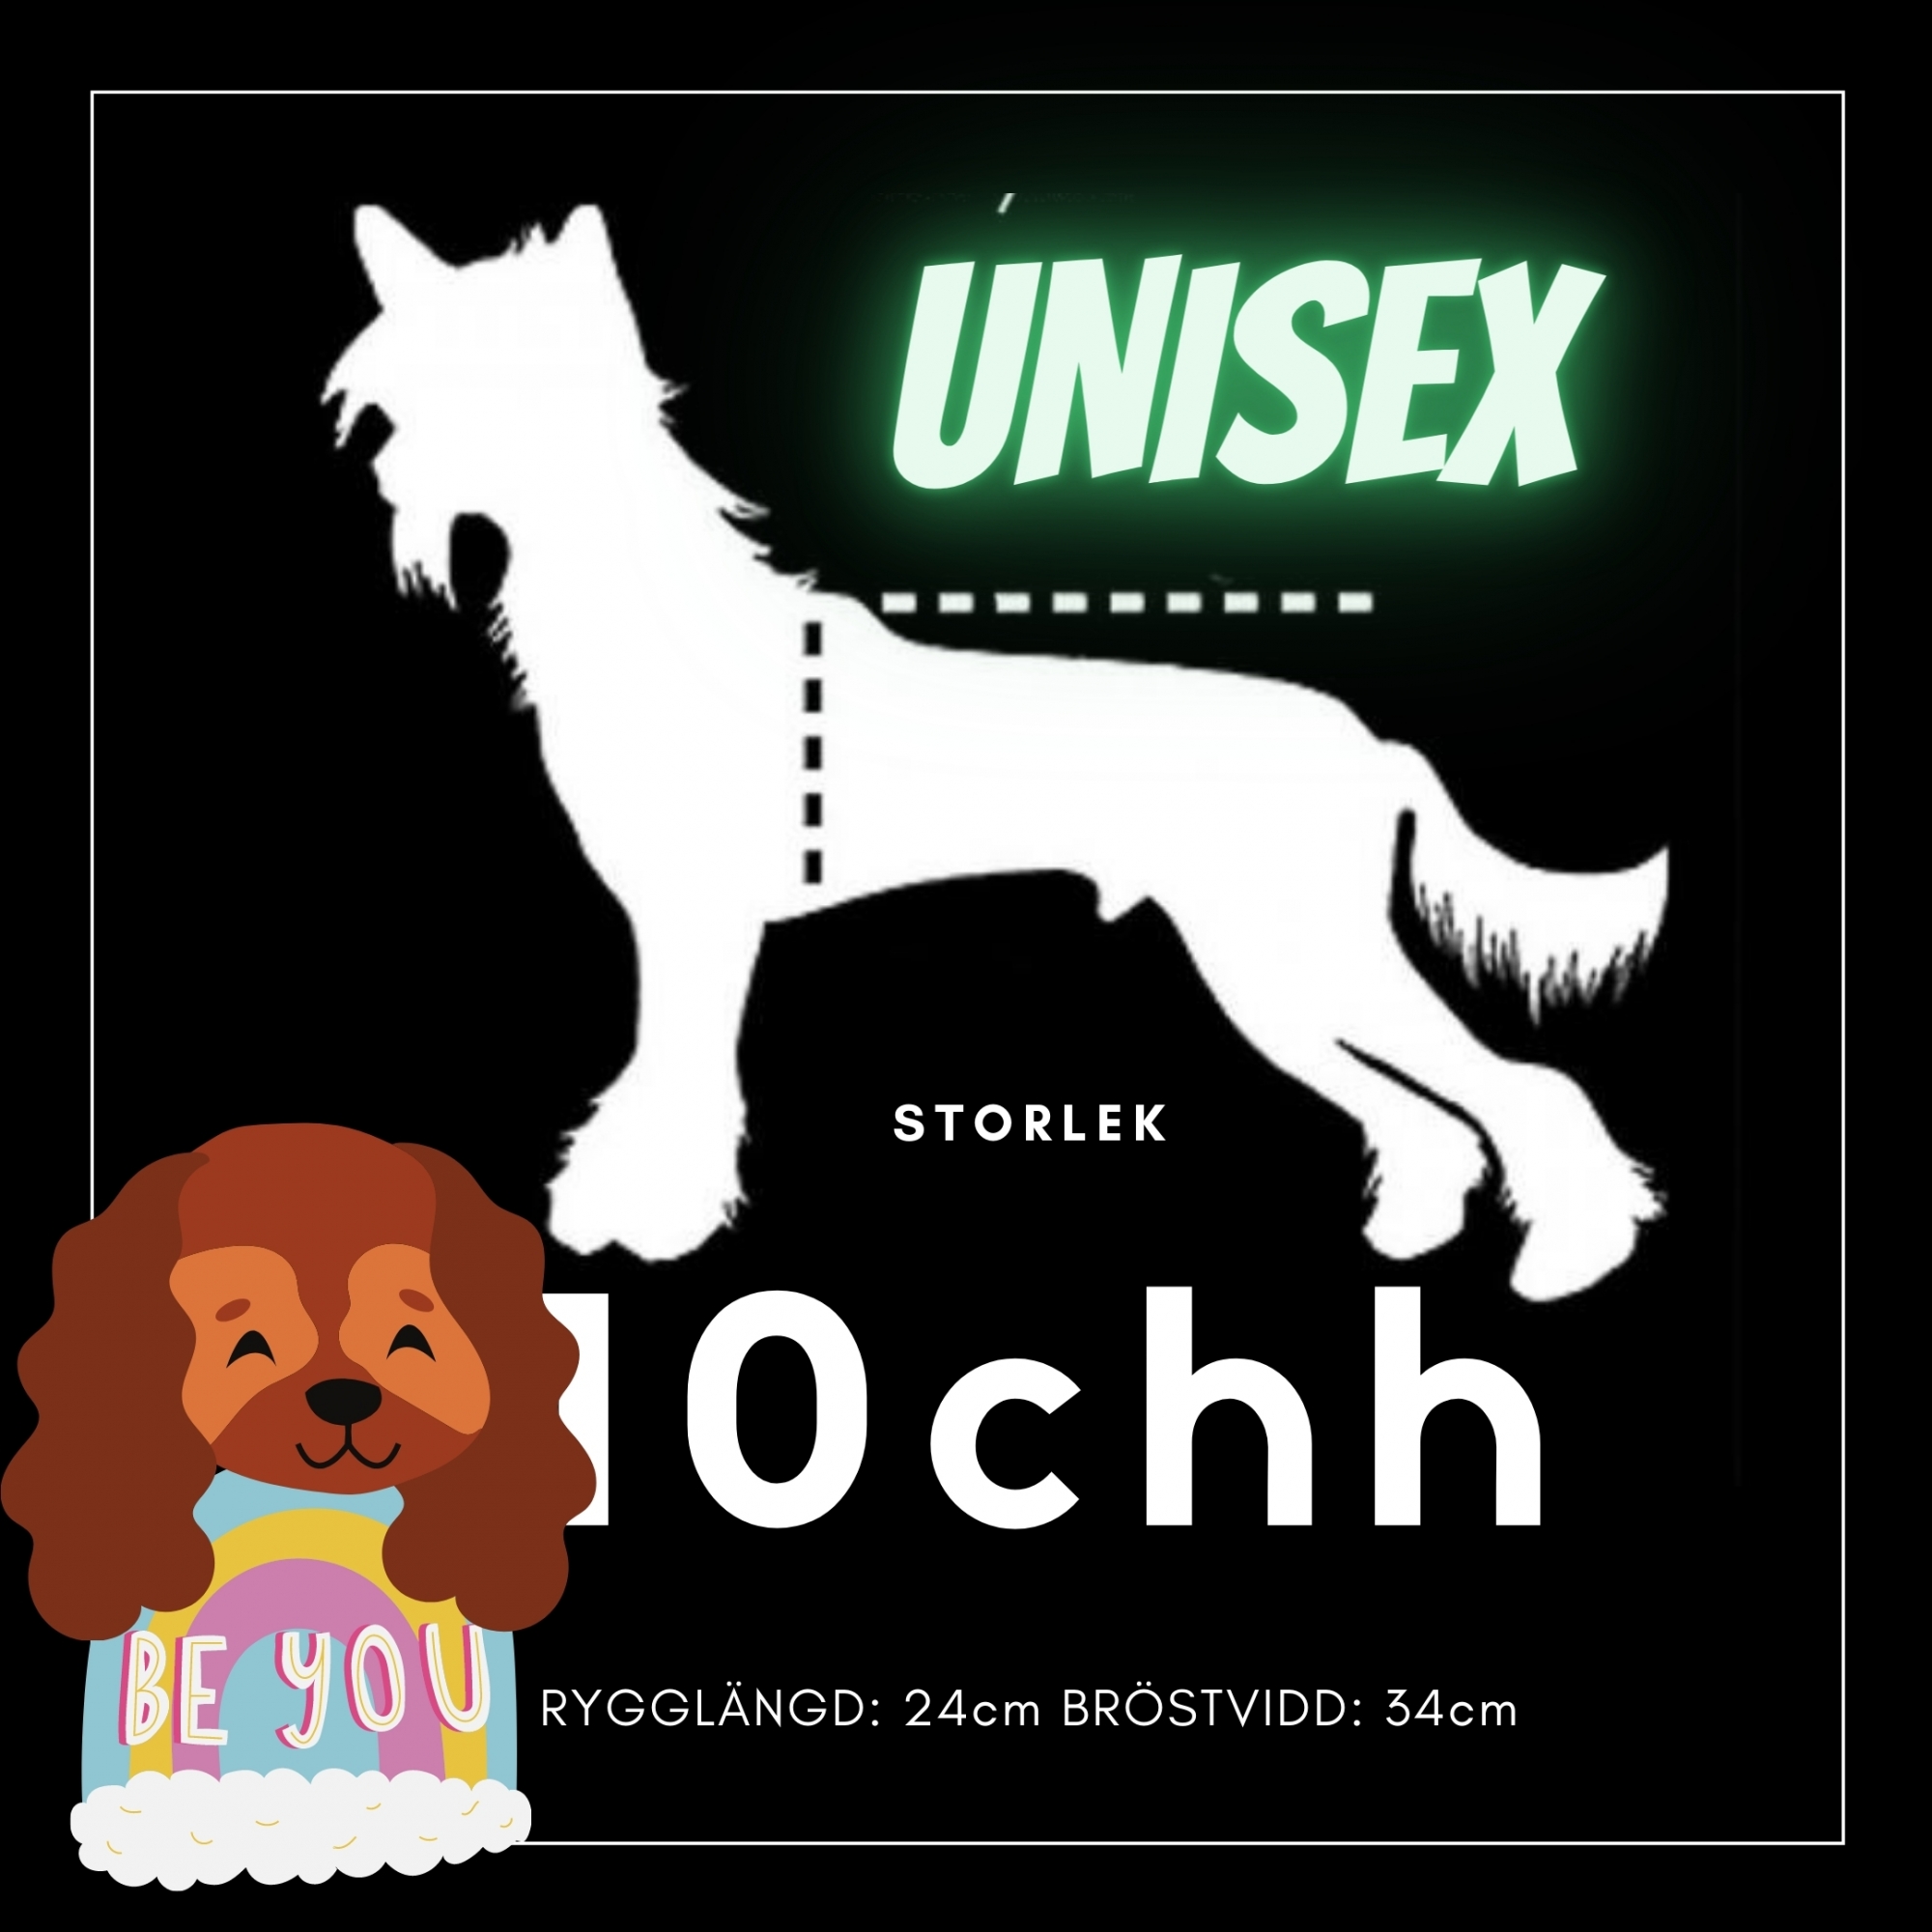 UNISEX Storlek 10chh - Passion For Pet Fashion